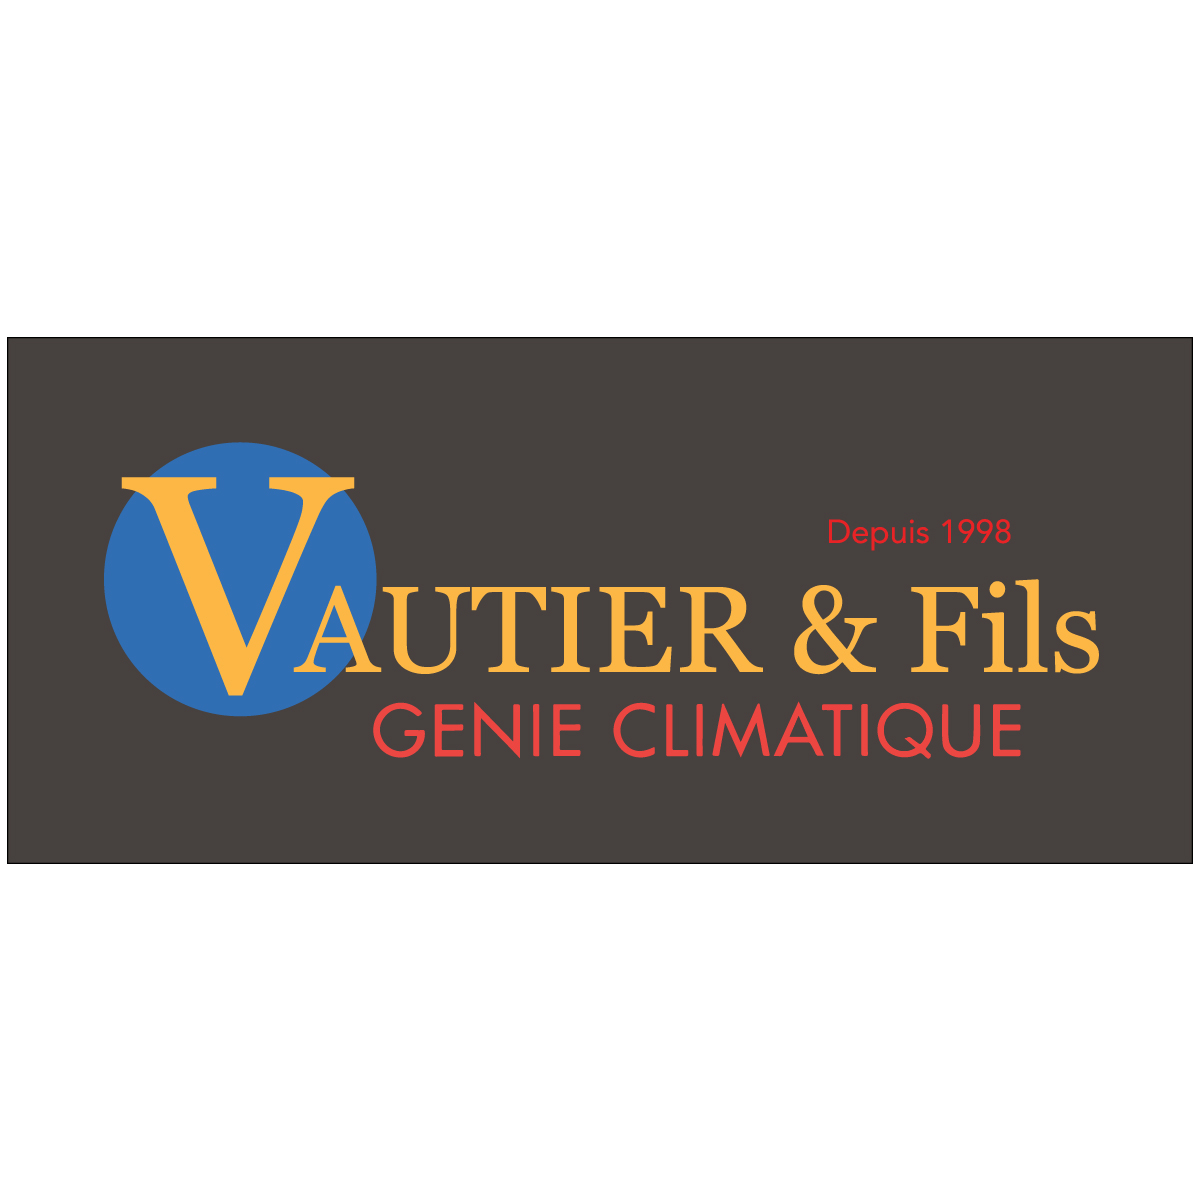 (c) Chauffage-vautier.fr